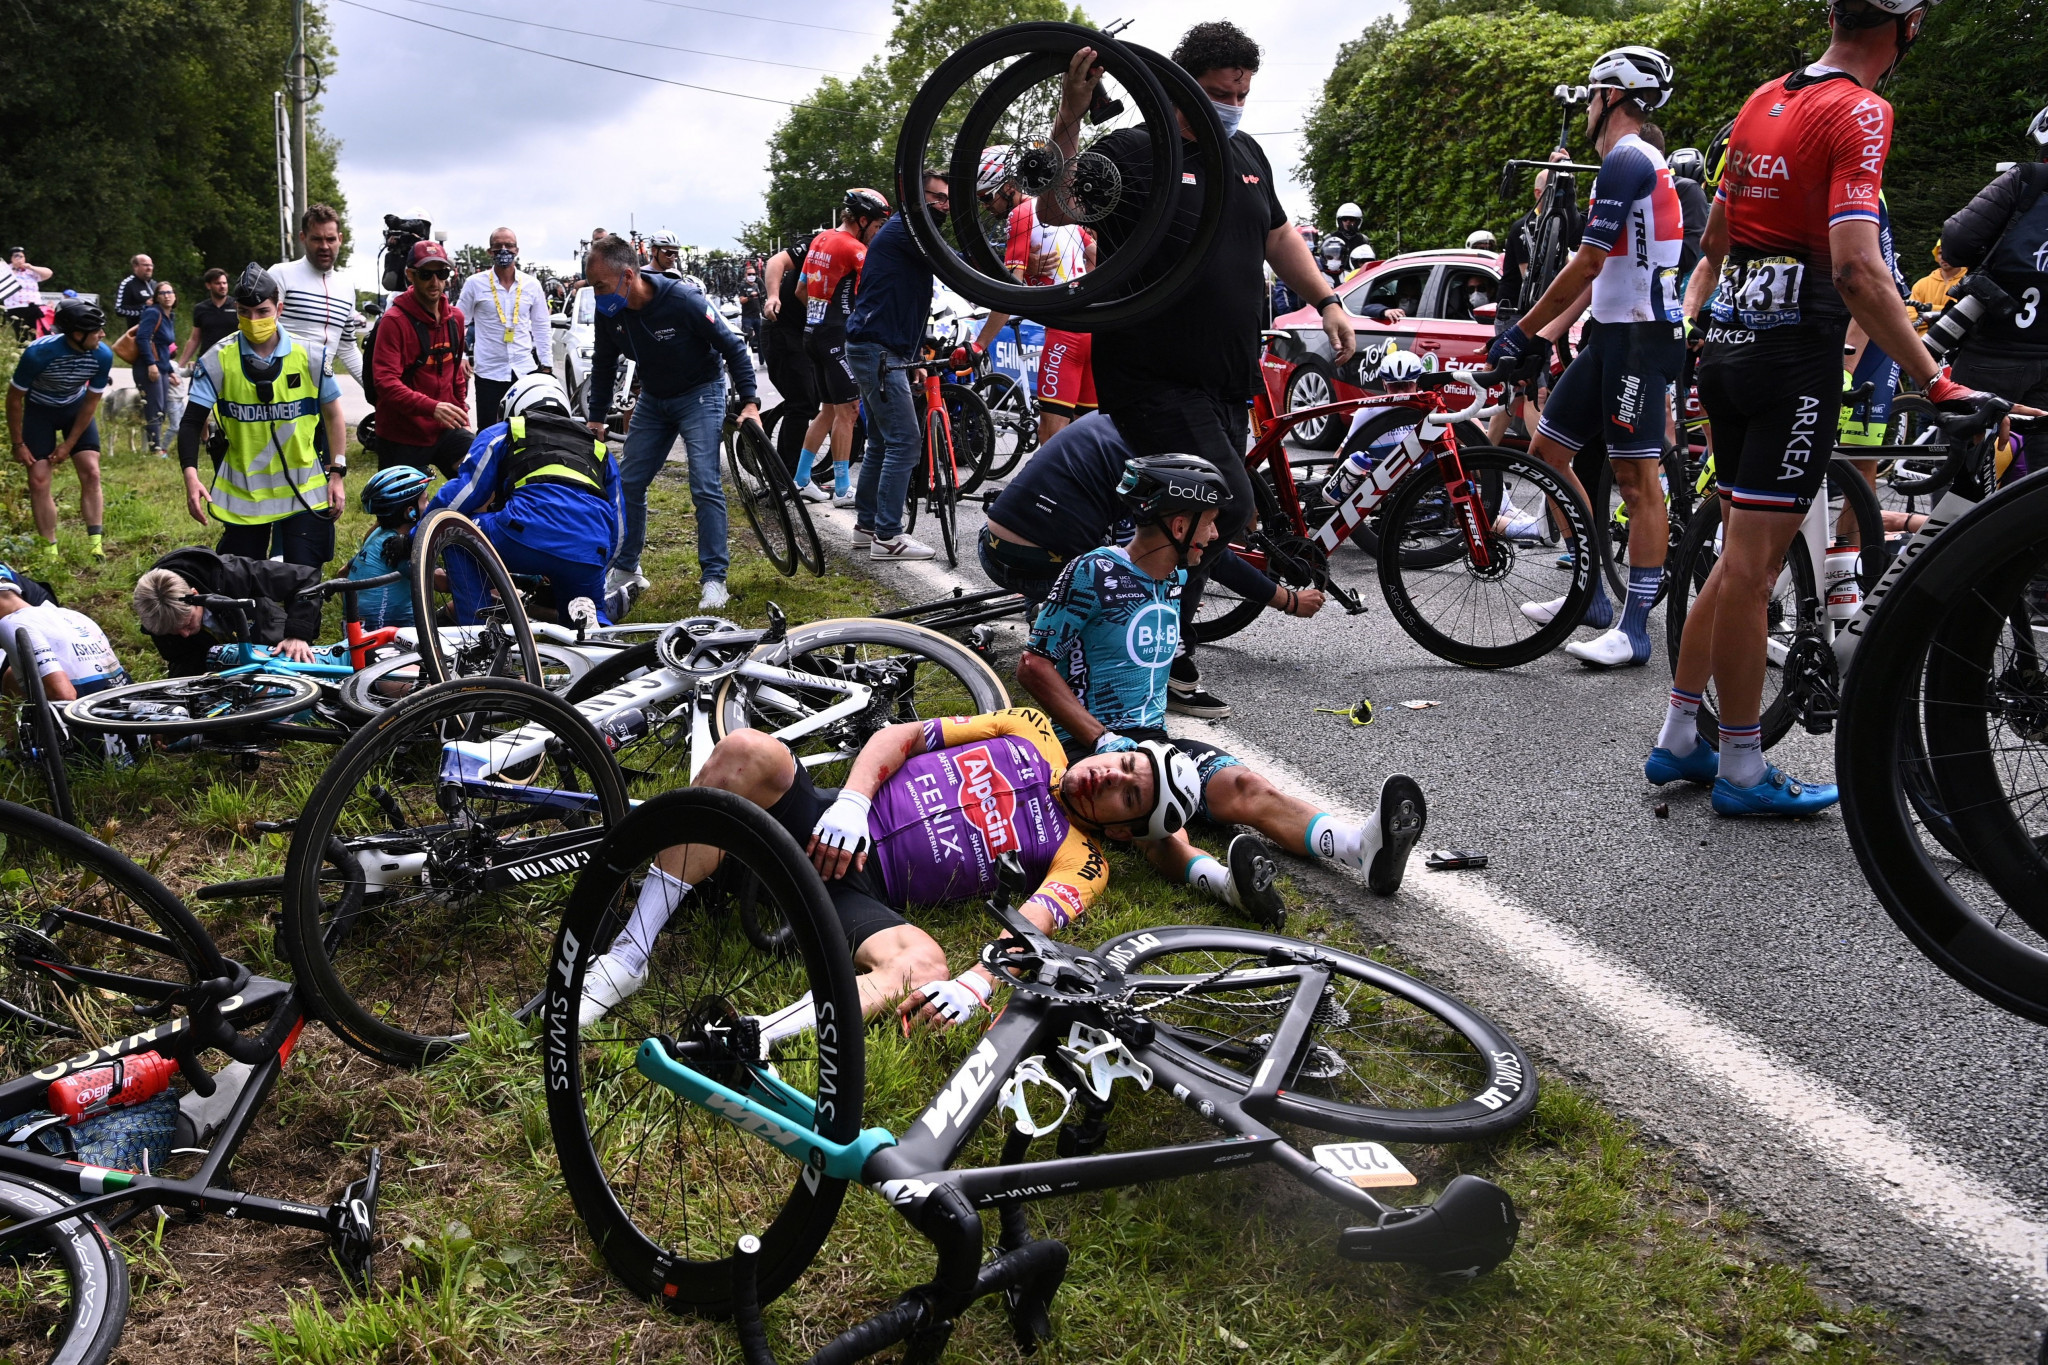 Spectator behind pile-up at Tour de France faces four-month suspended sentence